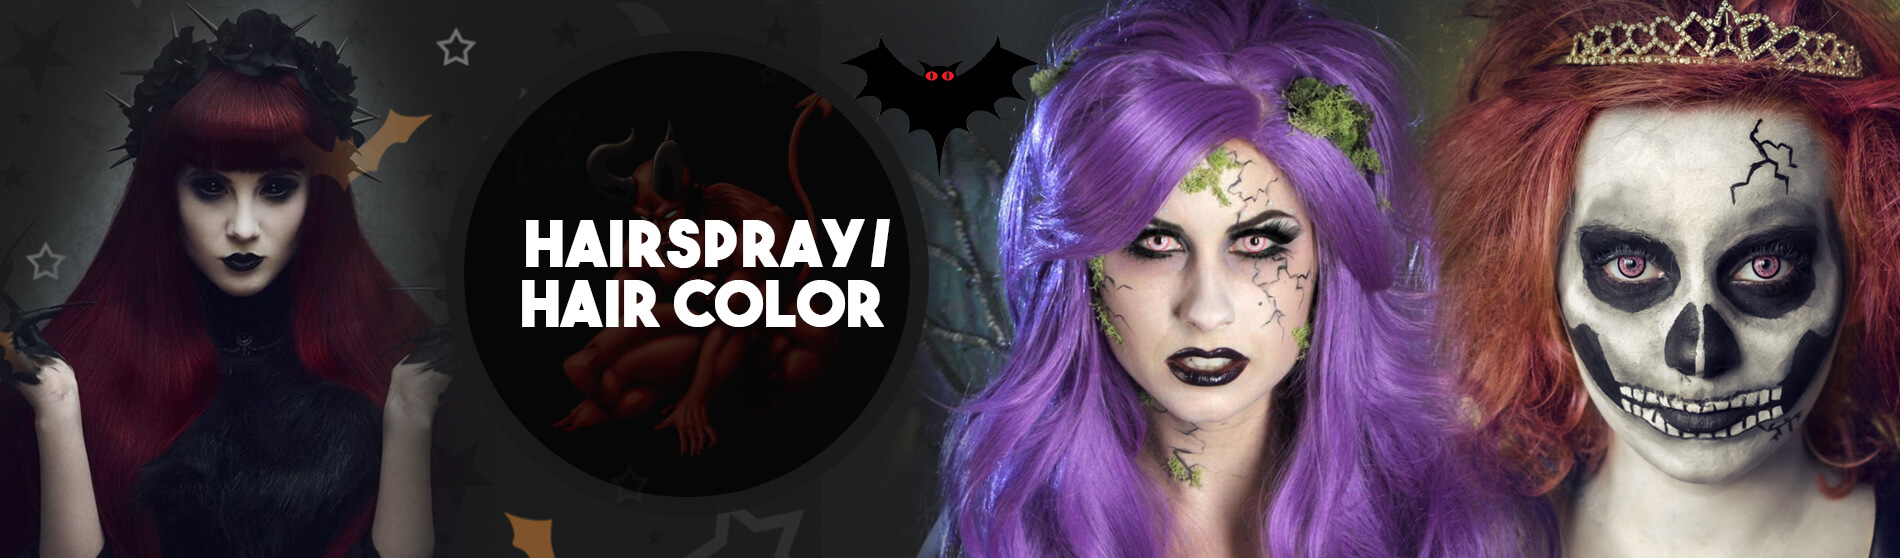 Glendale Halloween : Hairspray-Haircolor